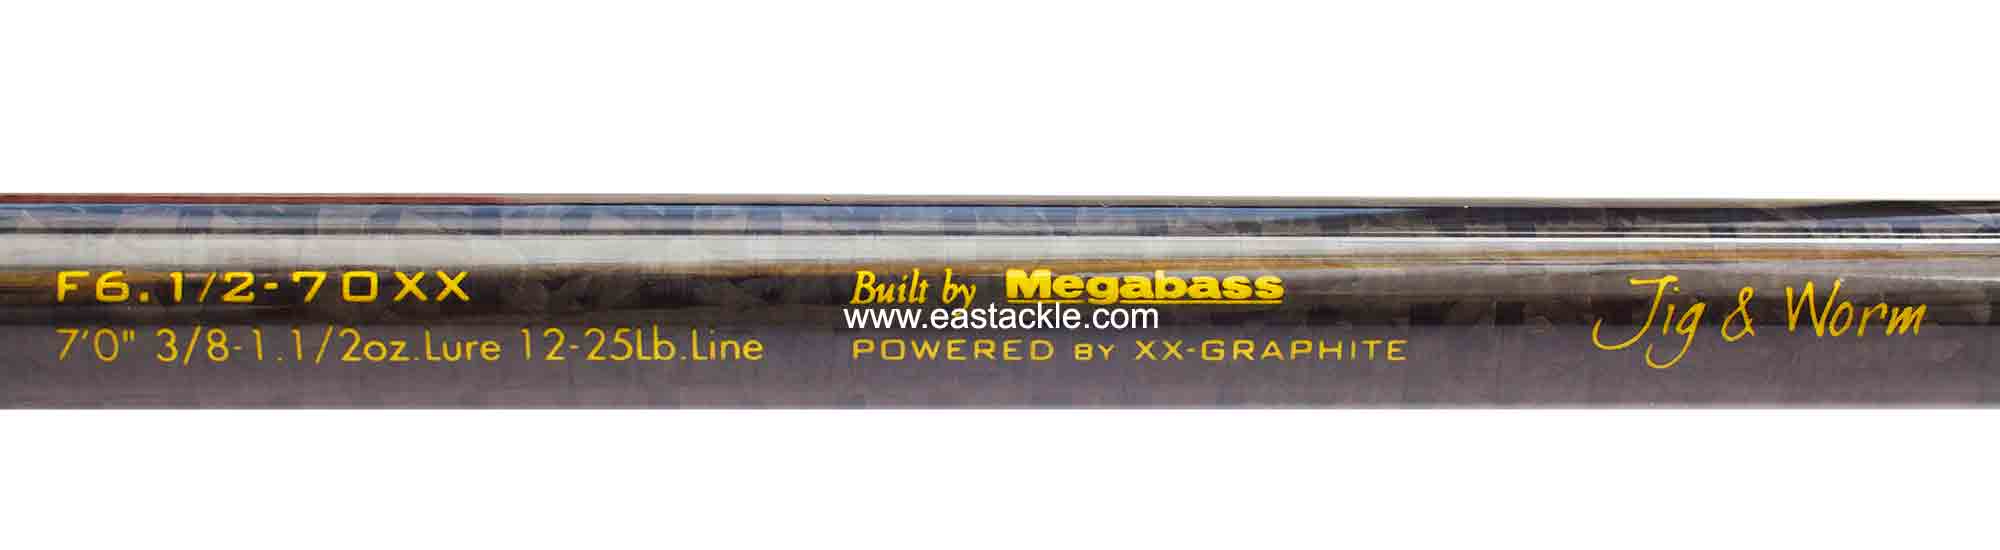 Megabass - Orochi XX - F6.1/2-70XX - JIG & WORM - Bait Casting Rod - Blank Specifications